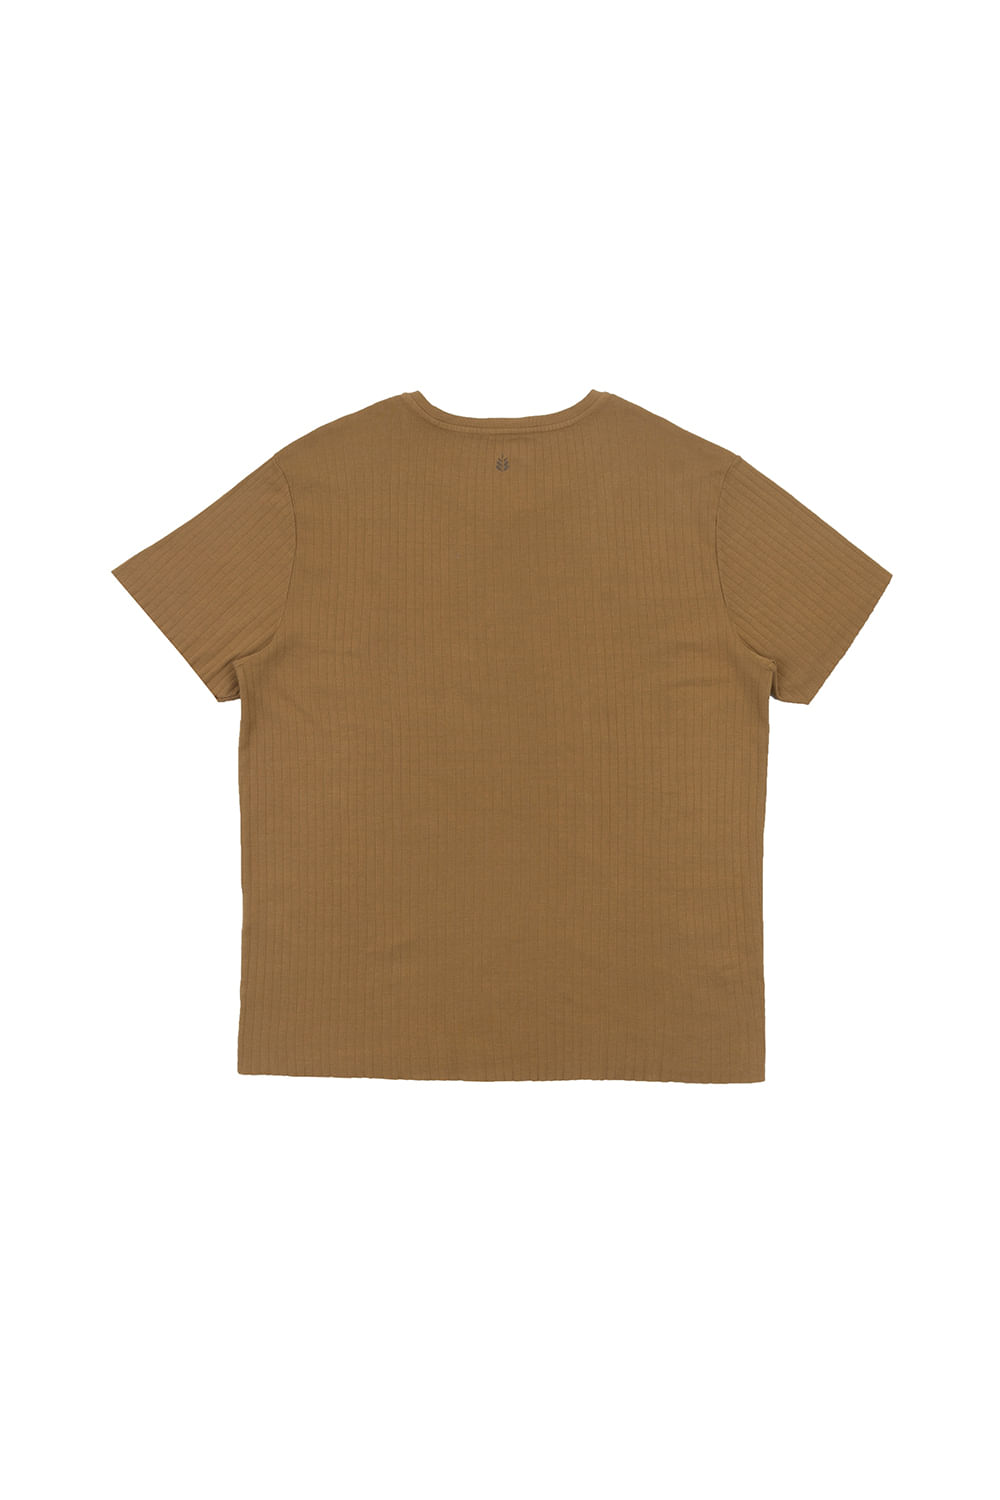 Camiseta-Colca-Canyon-Marrom